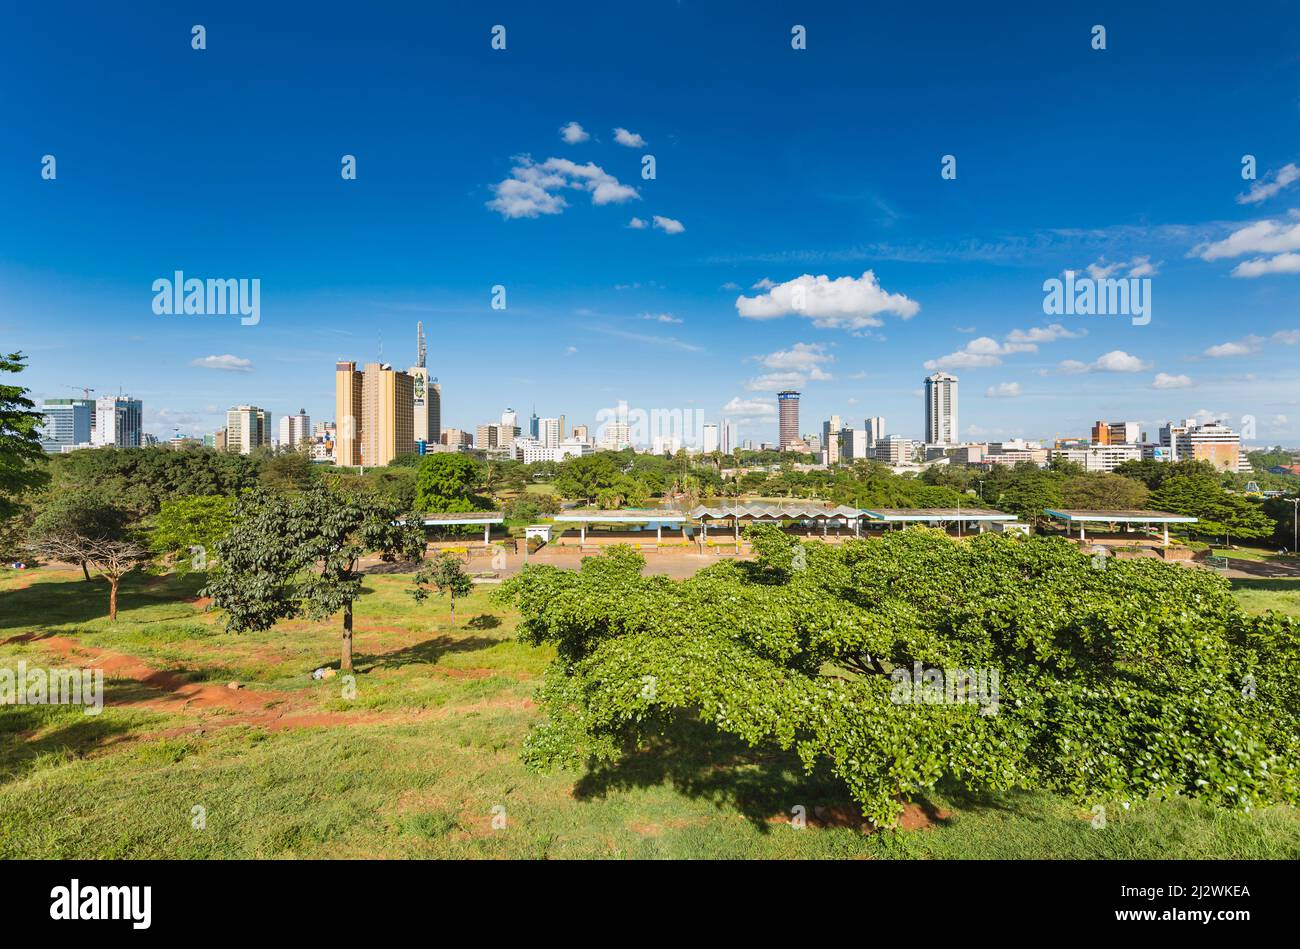 NAIROBI - DECEMBER 24: View of the skyline of Nairobi, Kenya with Uhuru Park in the foreground on December 24, 2015 Stock Photo